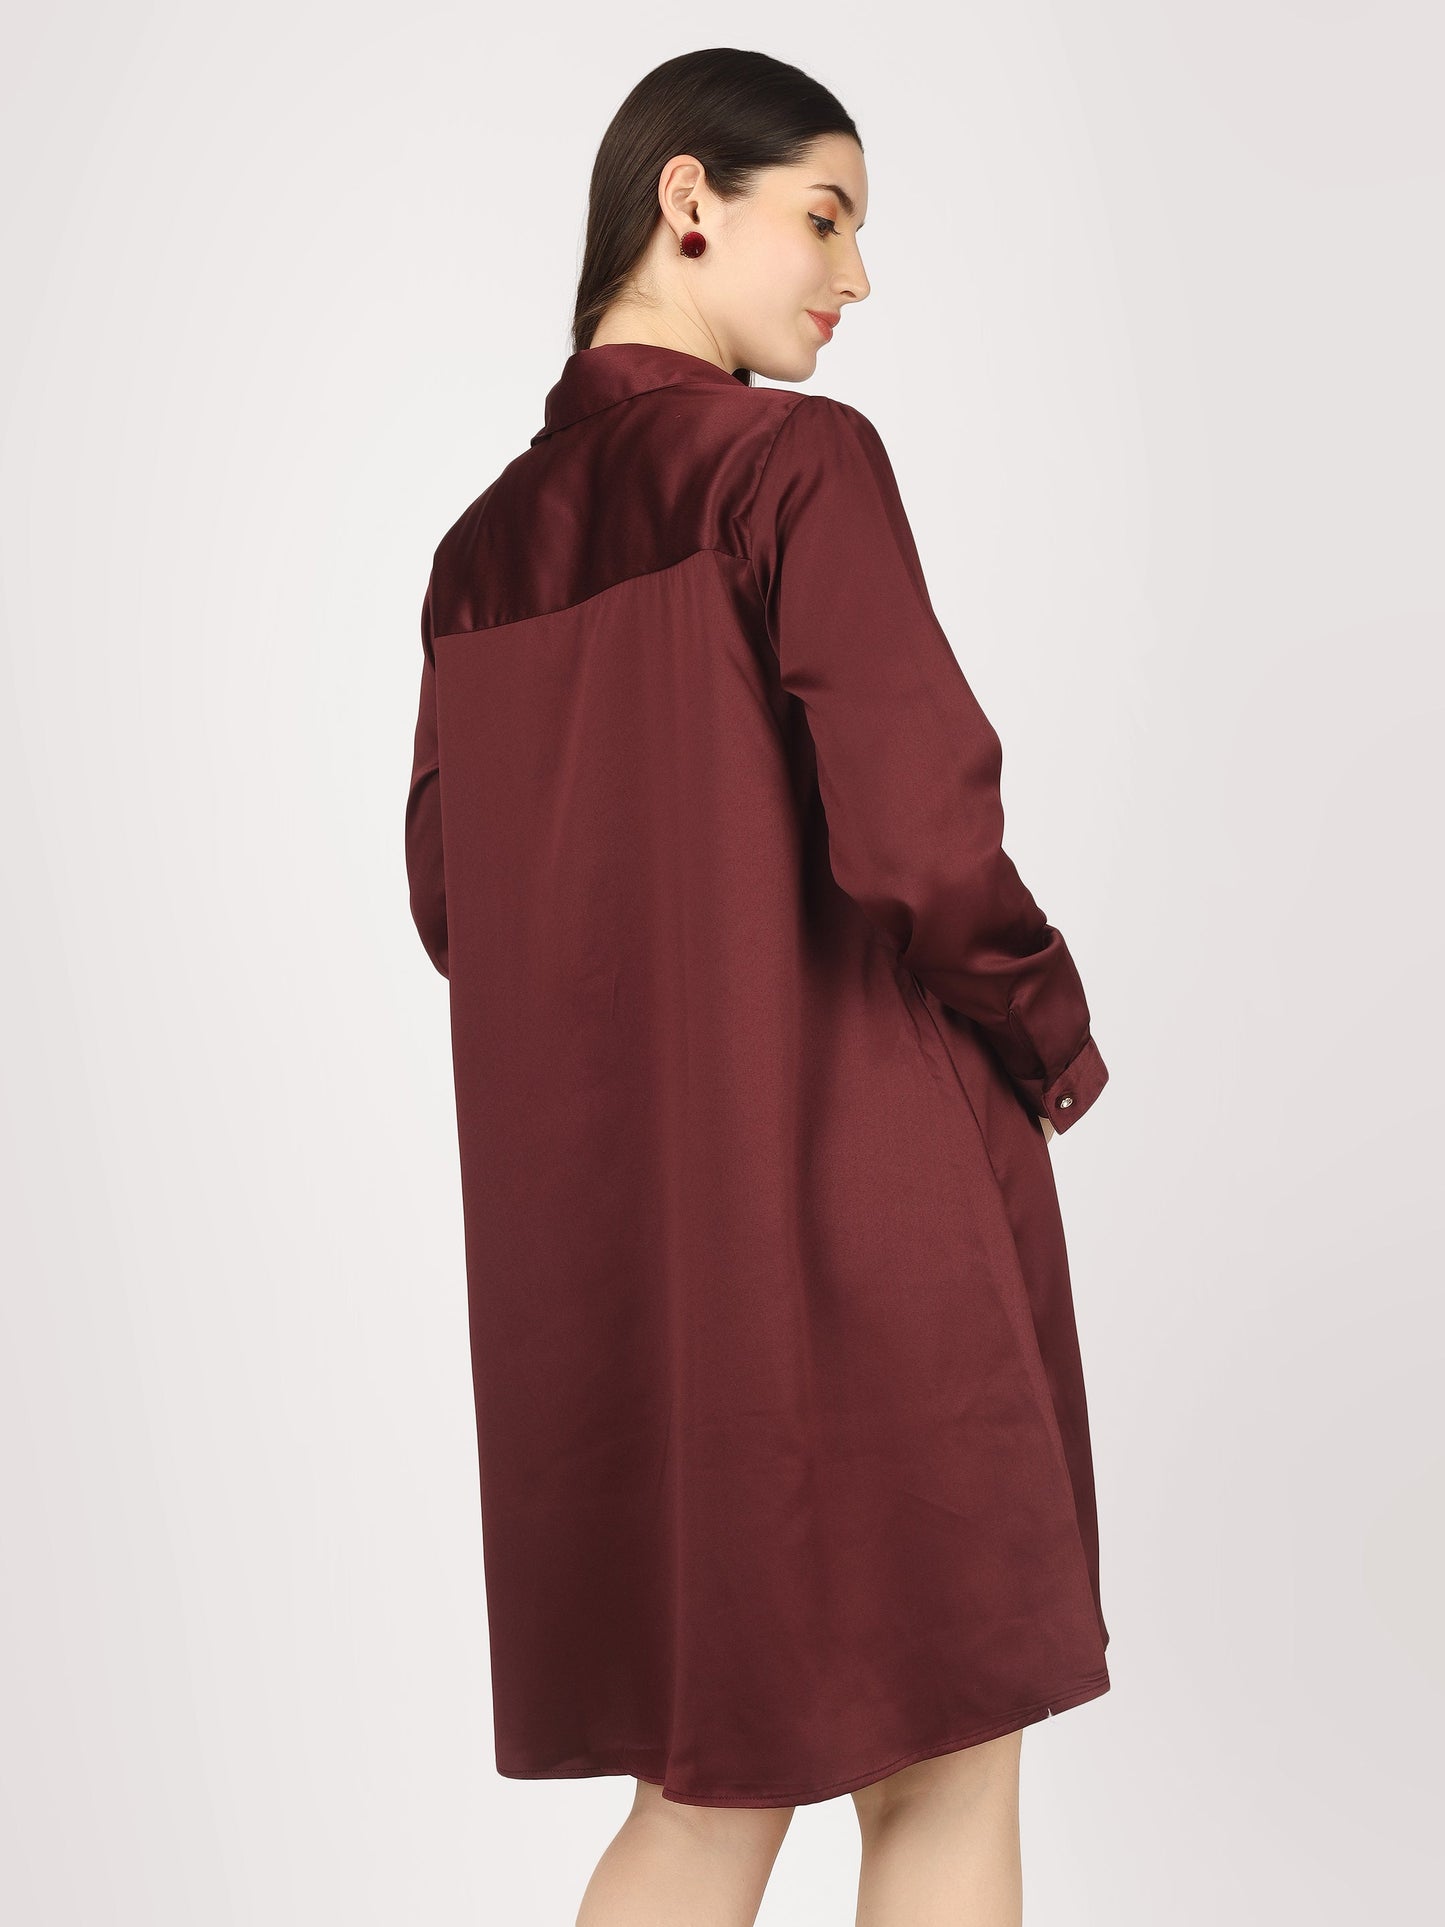 Burgundy Satin Shirt - Luxury Maternity Dress